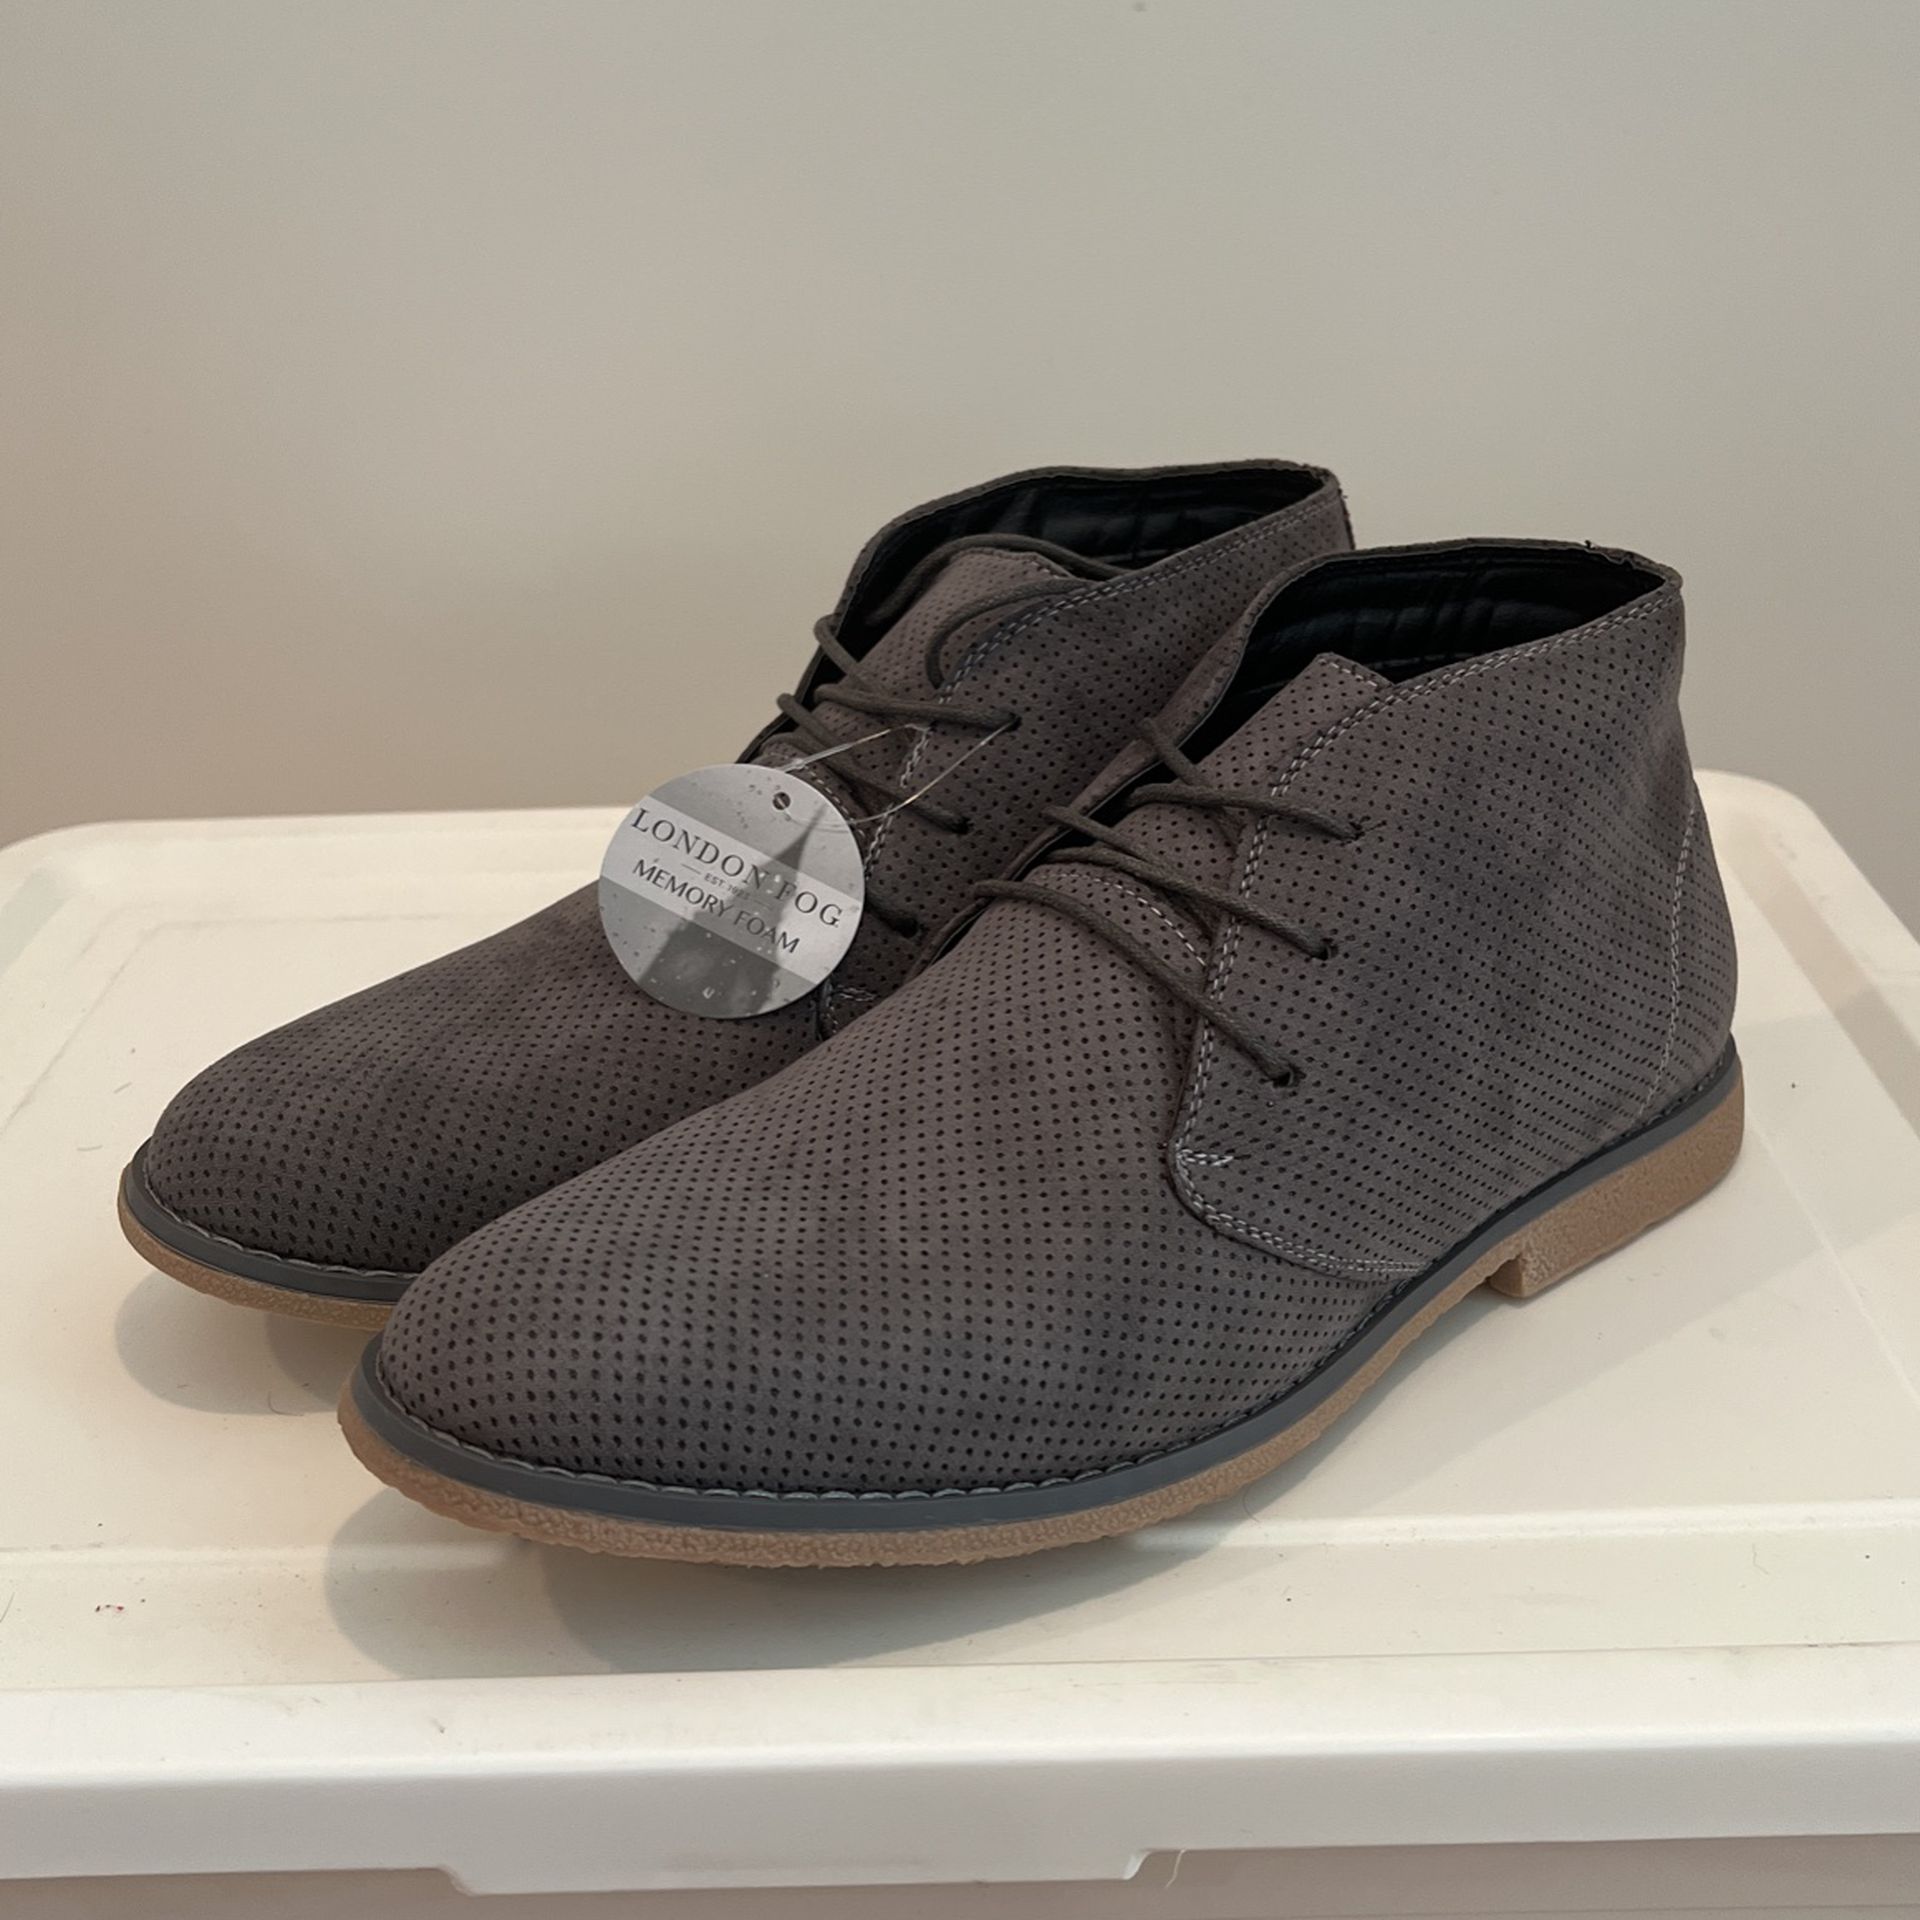 London Fog - Chukka Boots - Color Grey - Size 9.5 Mens